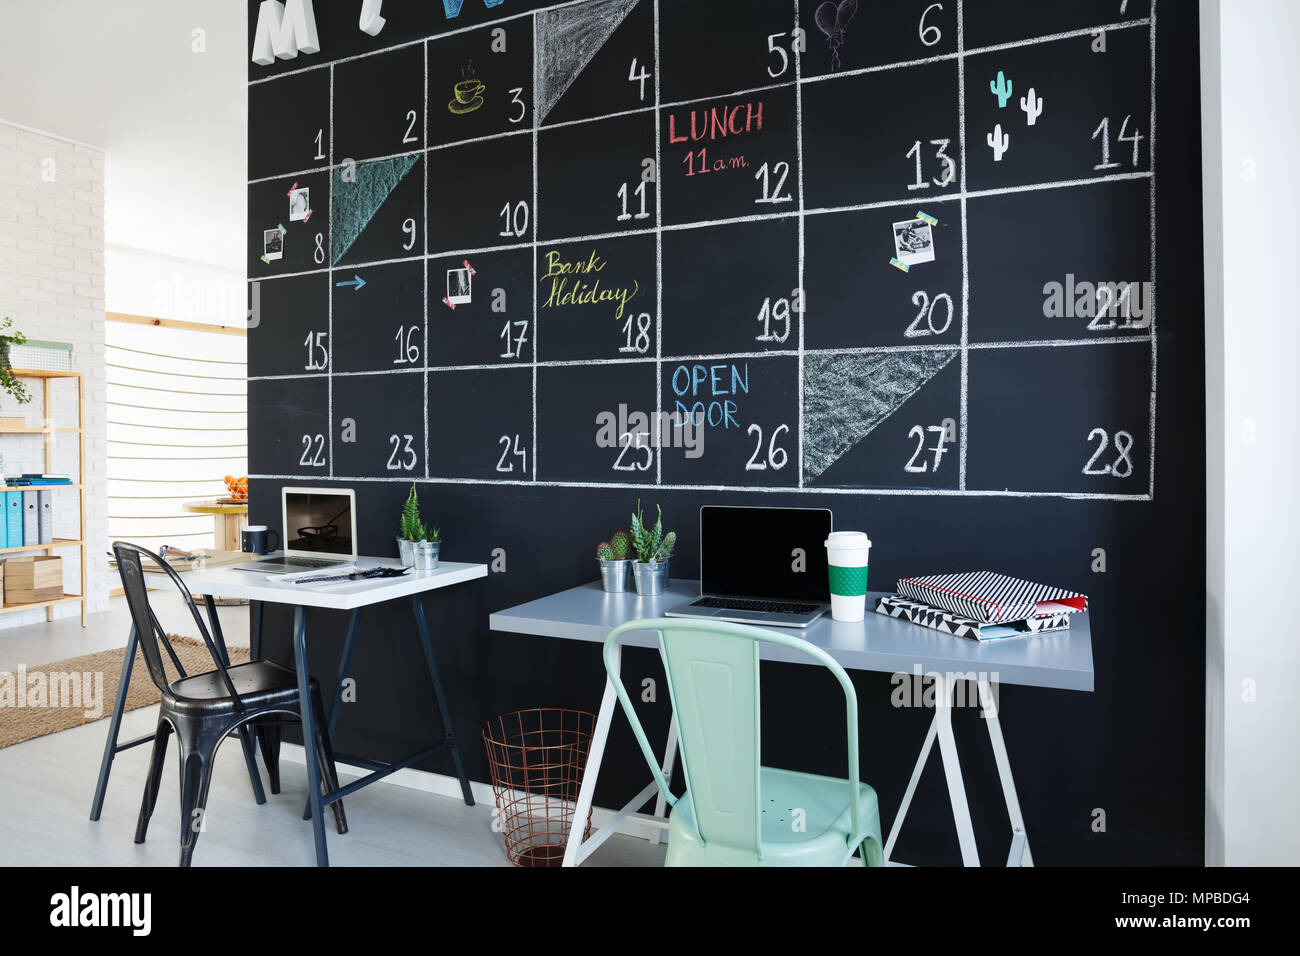 Office interior with creative blackboard calendar, desks and chairs Stock  Photo - Alamy